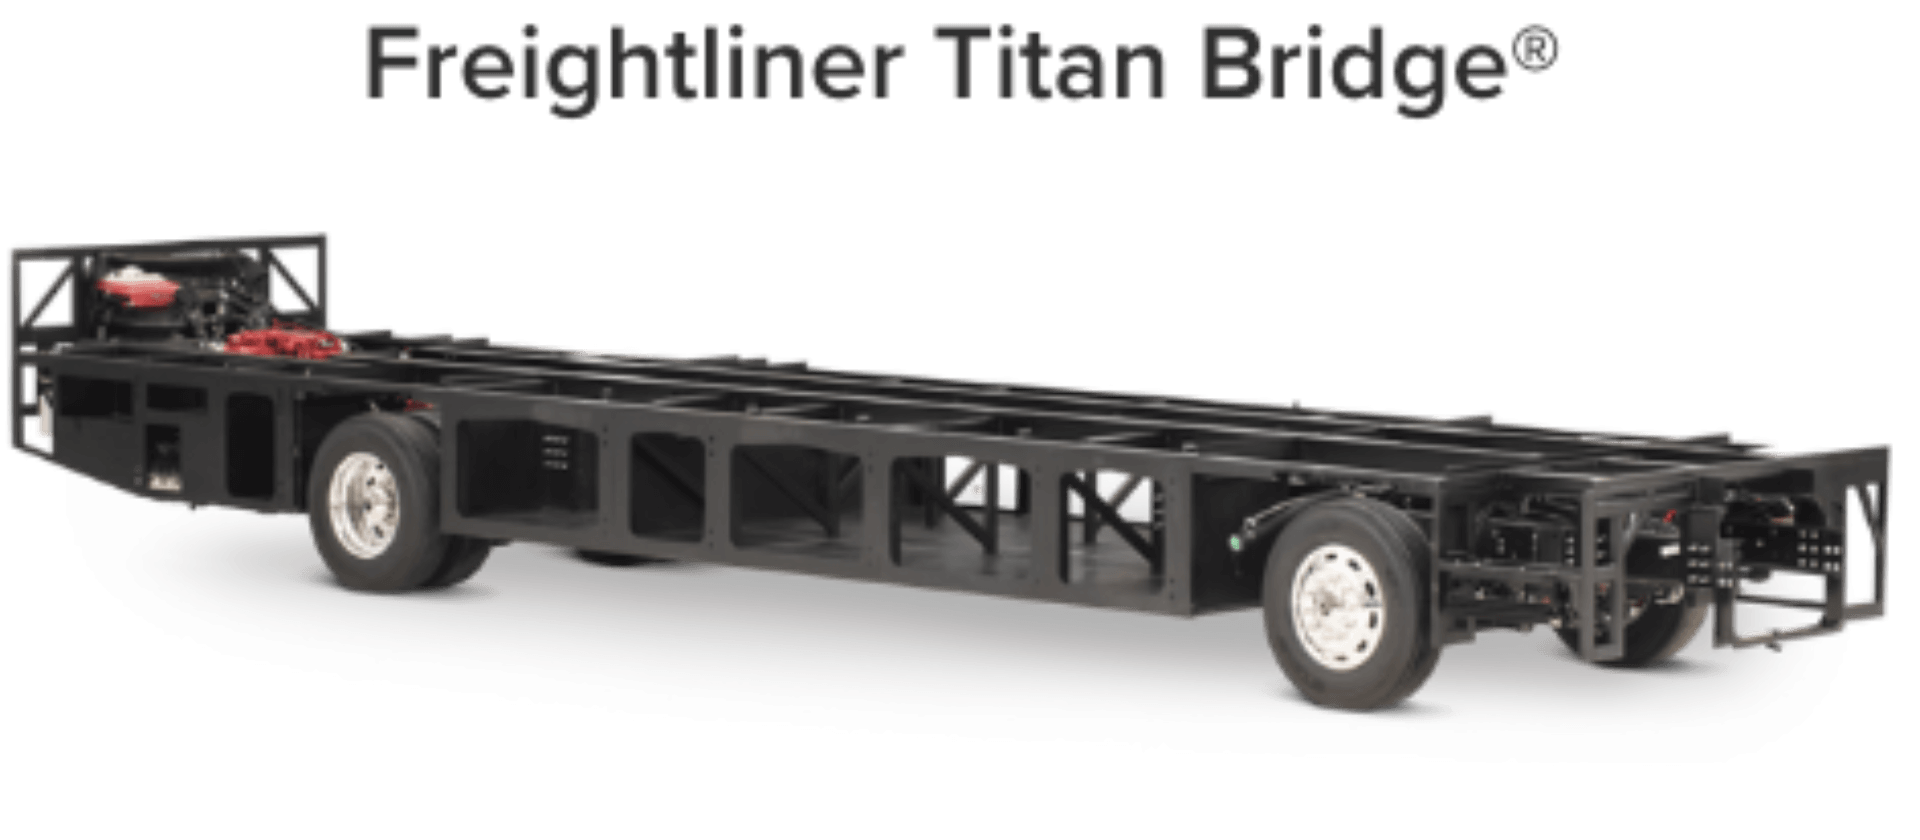 freightliner-titan-bridge